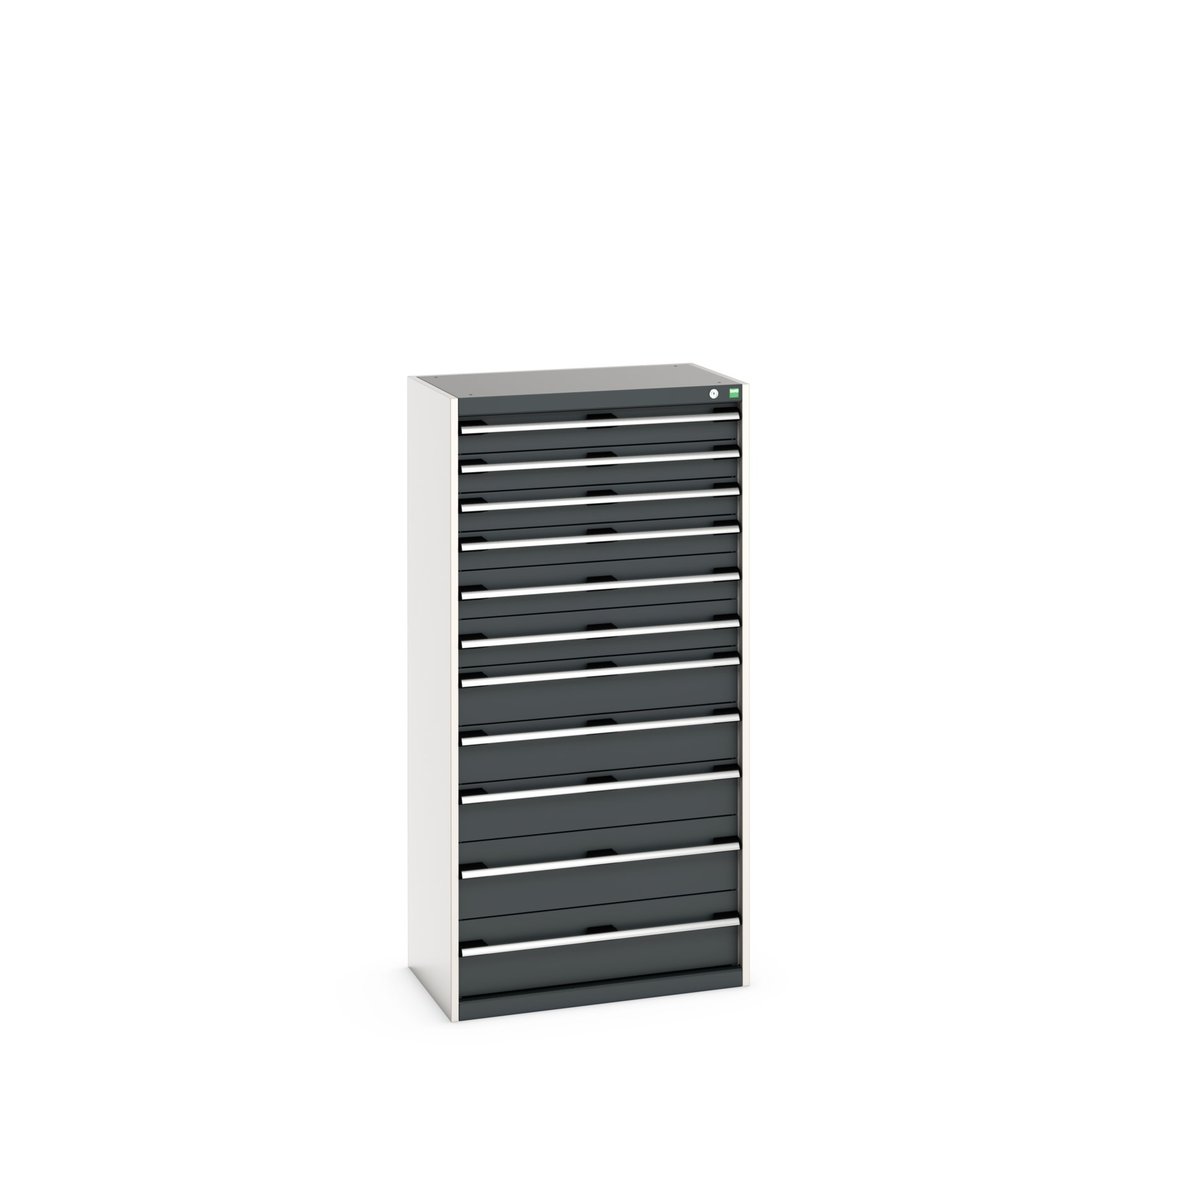 40012112. - cubio drawer cabinet